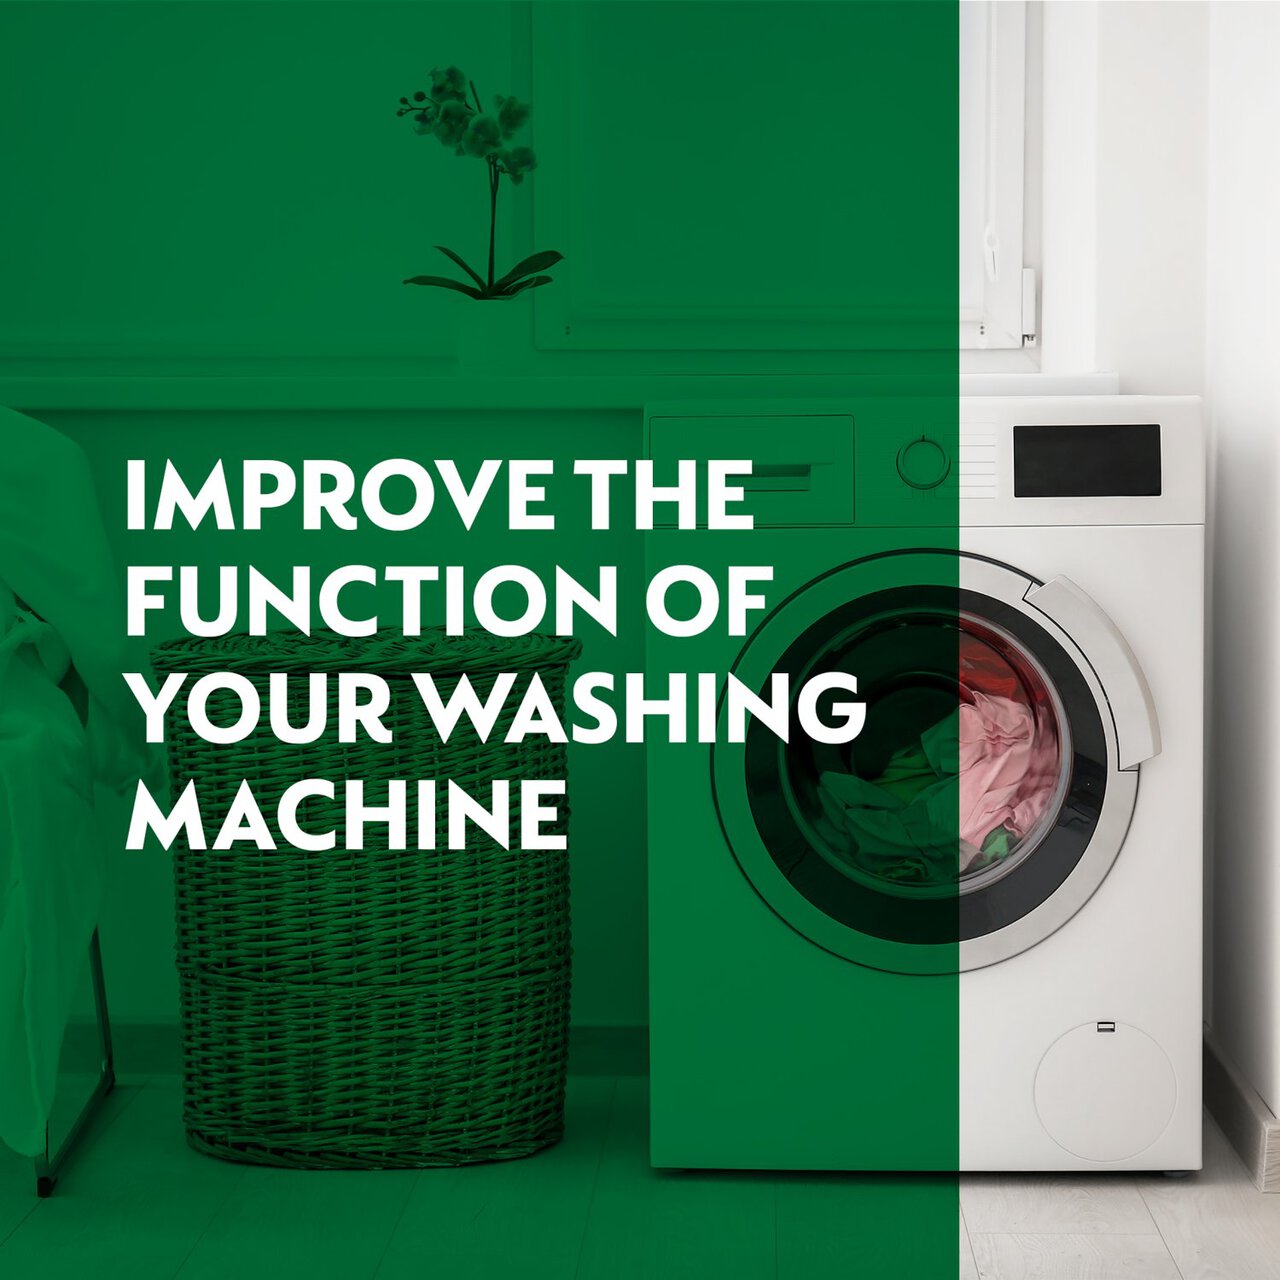 Dettol 5 in 1 Antibacterial Washing Machine Cleaner 250ml